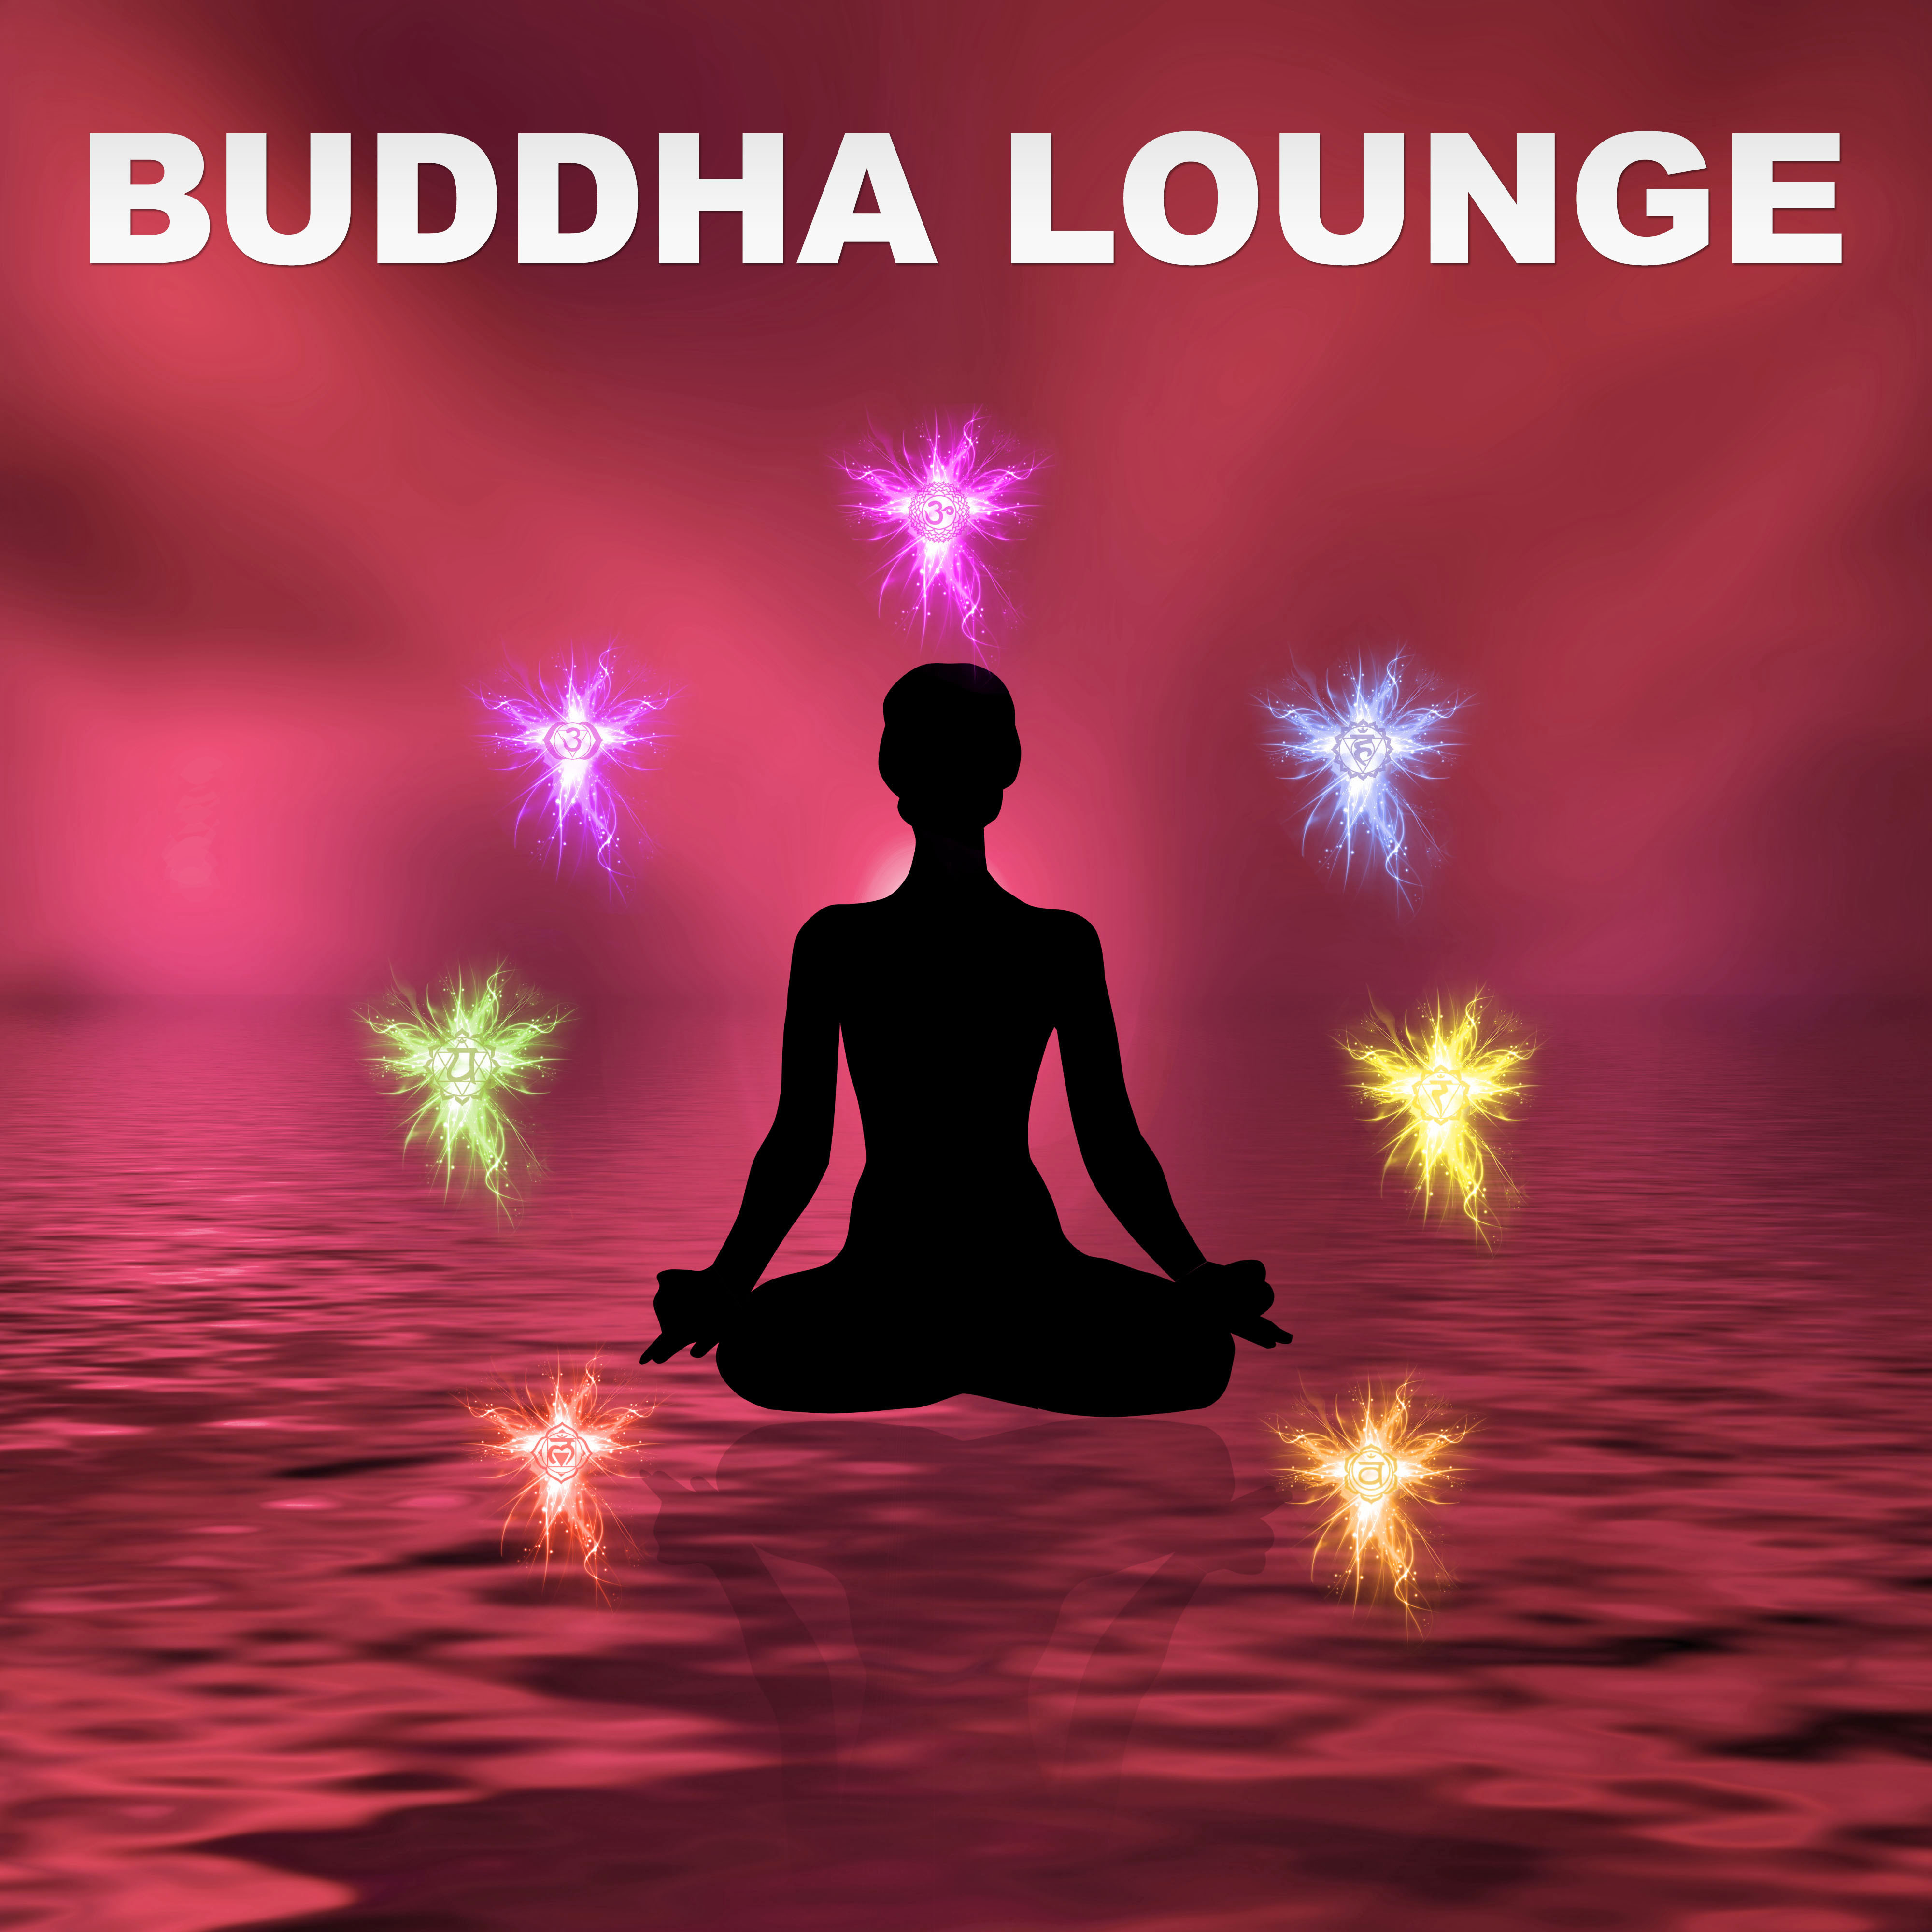 Buddha Lounge – Meditation, Inner Balance, Harmony, Yoga, Zen, Oasis Relaxation, Well Being